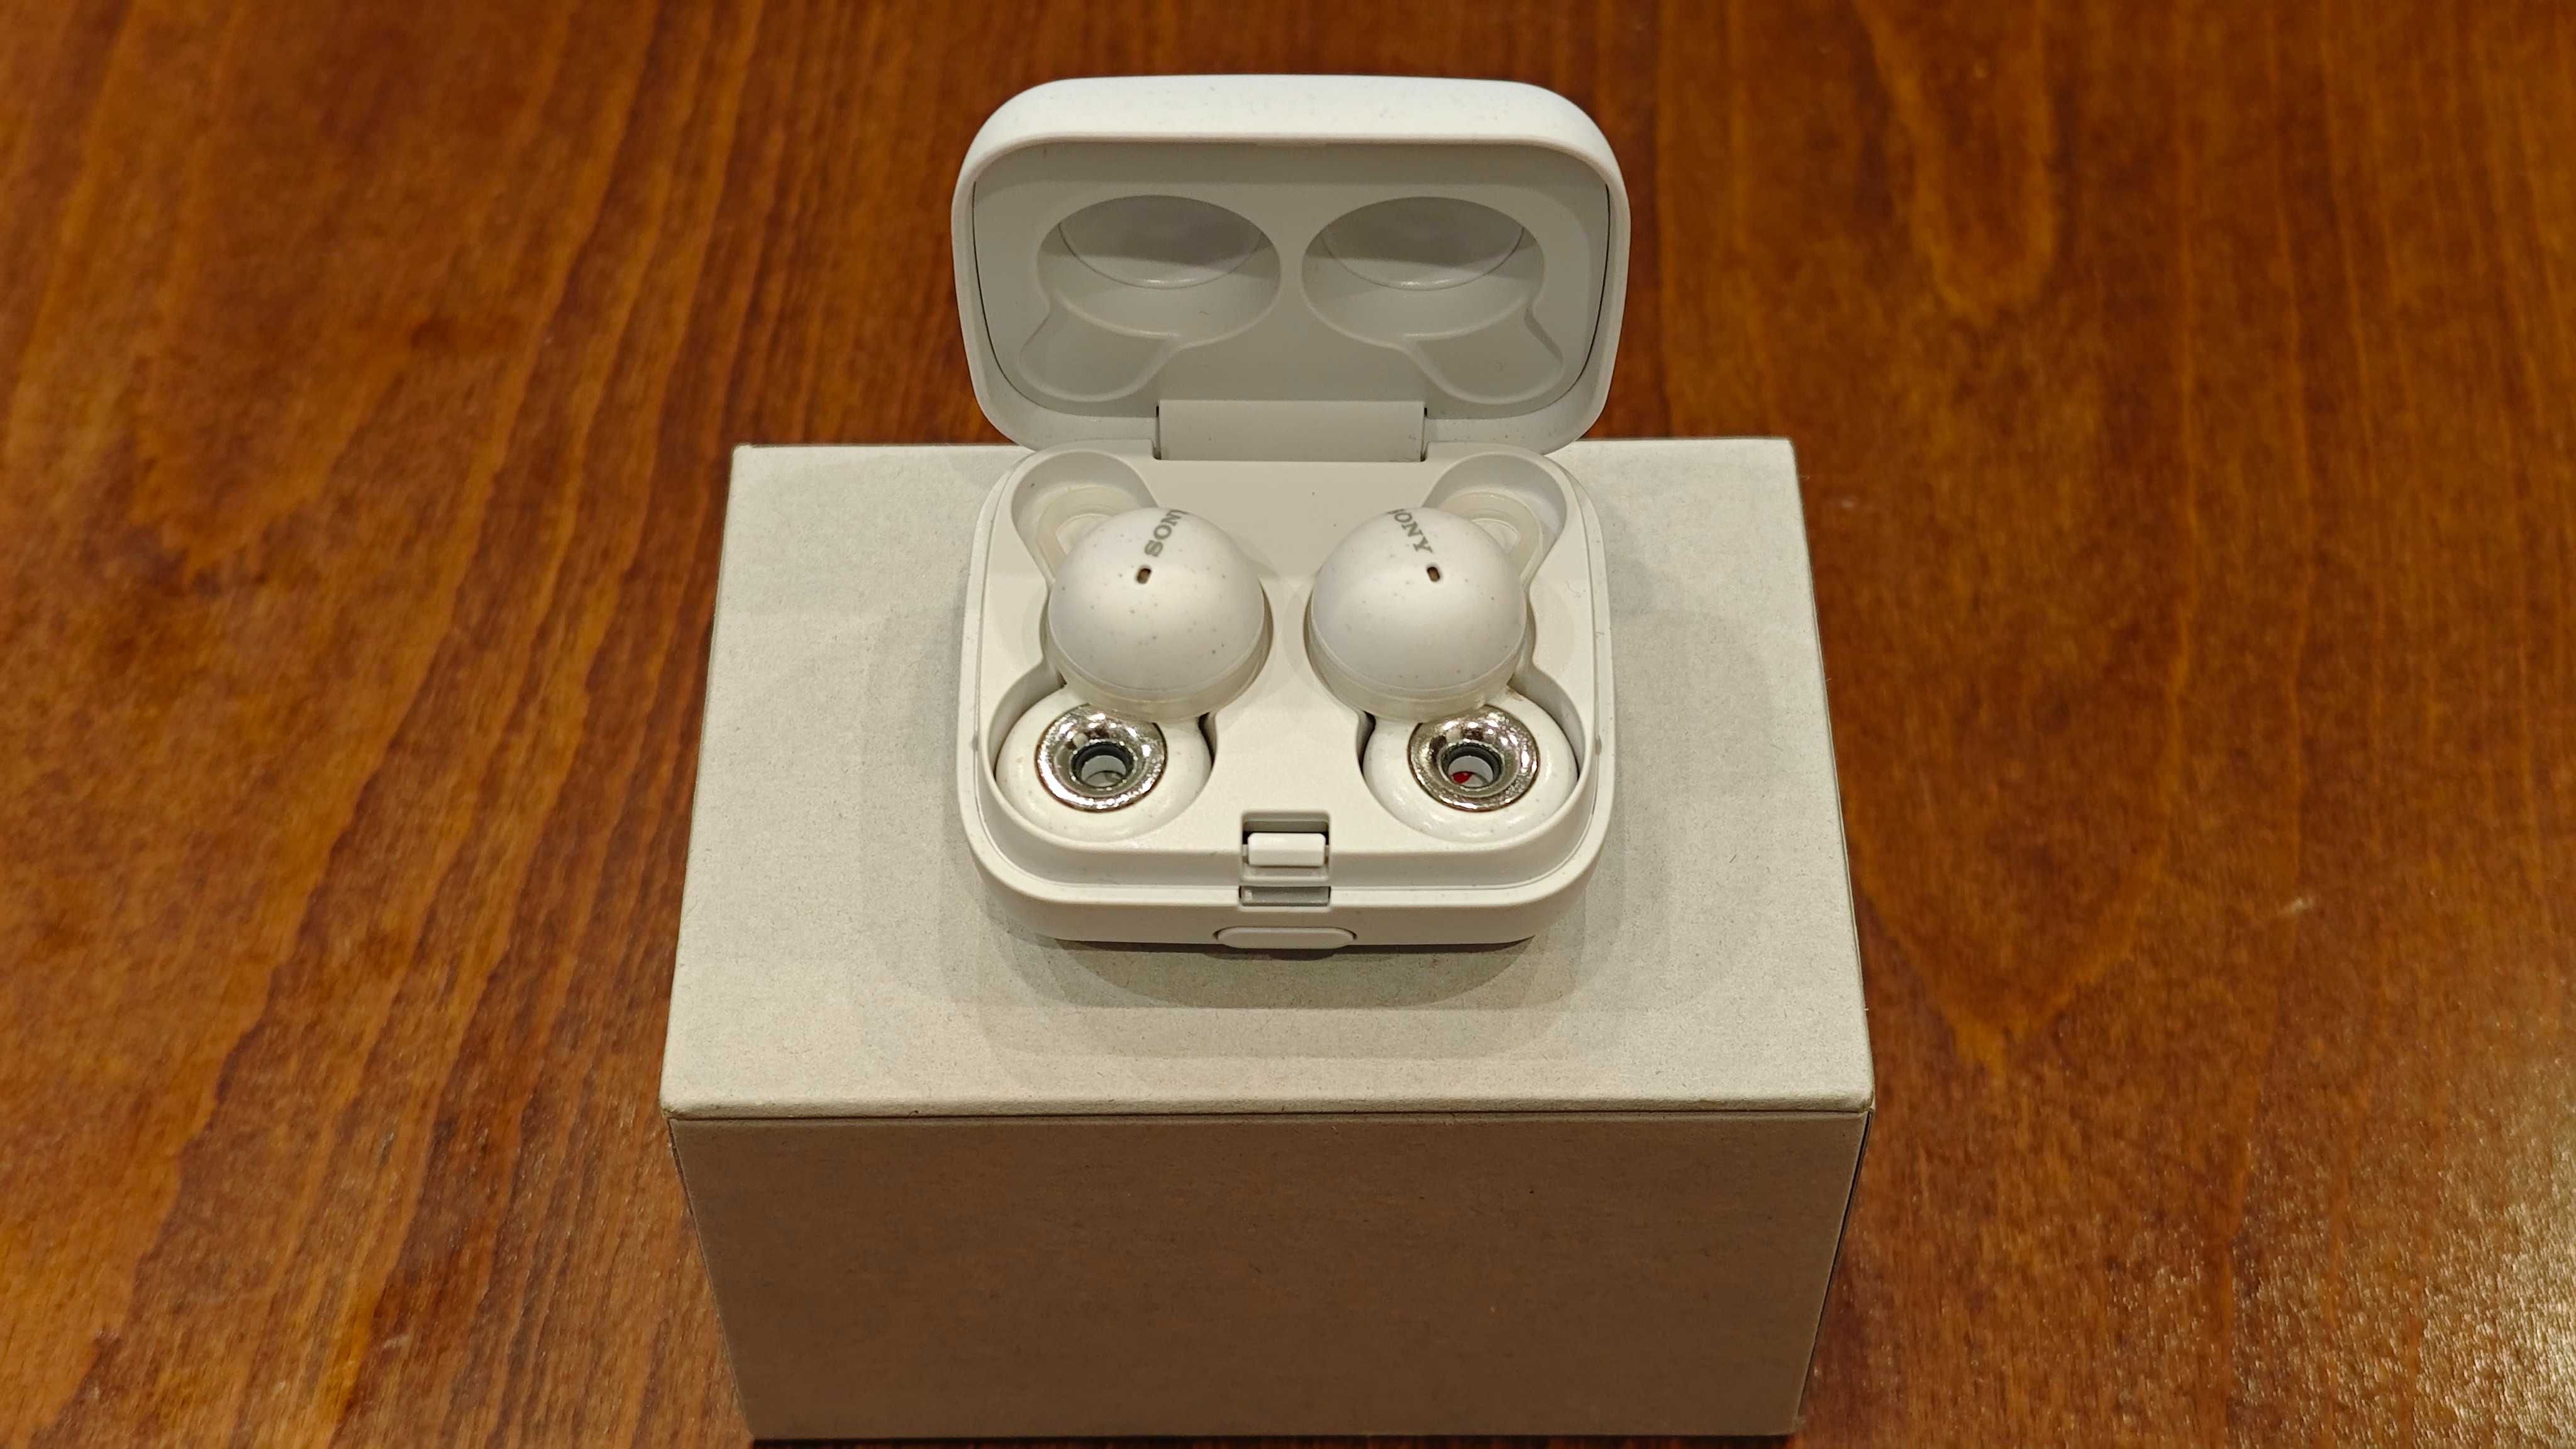 НОВИ - True wireless слушалки SONY LINKBUDS (2 години гаранция)